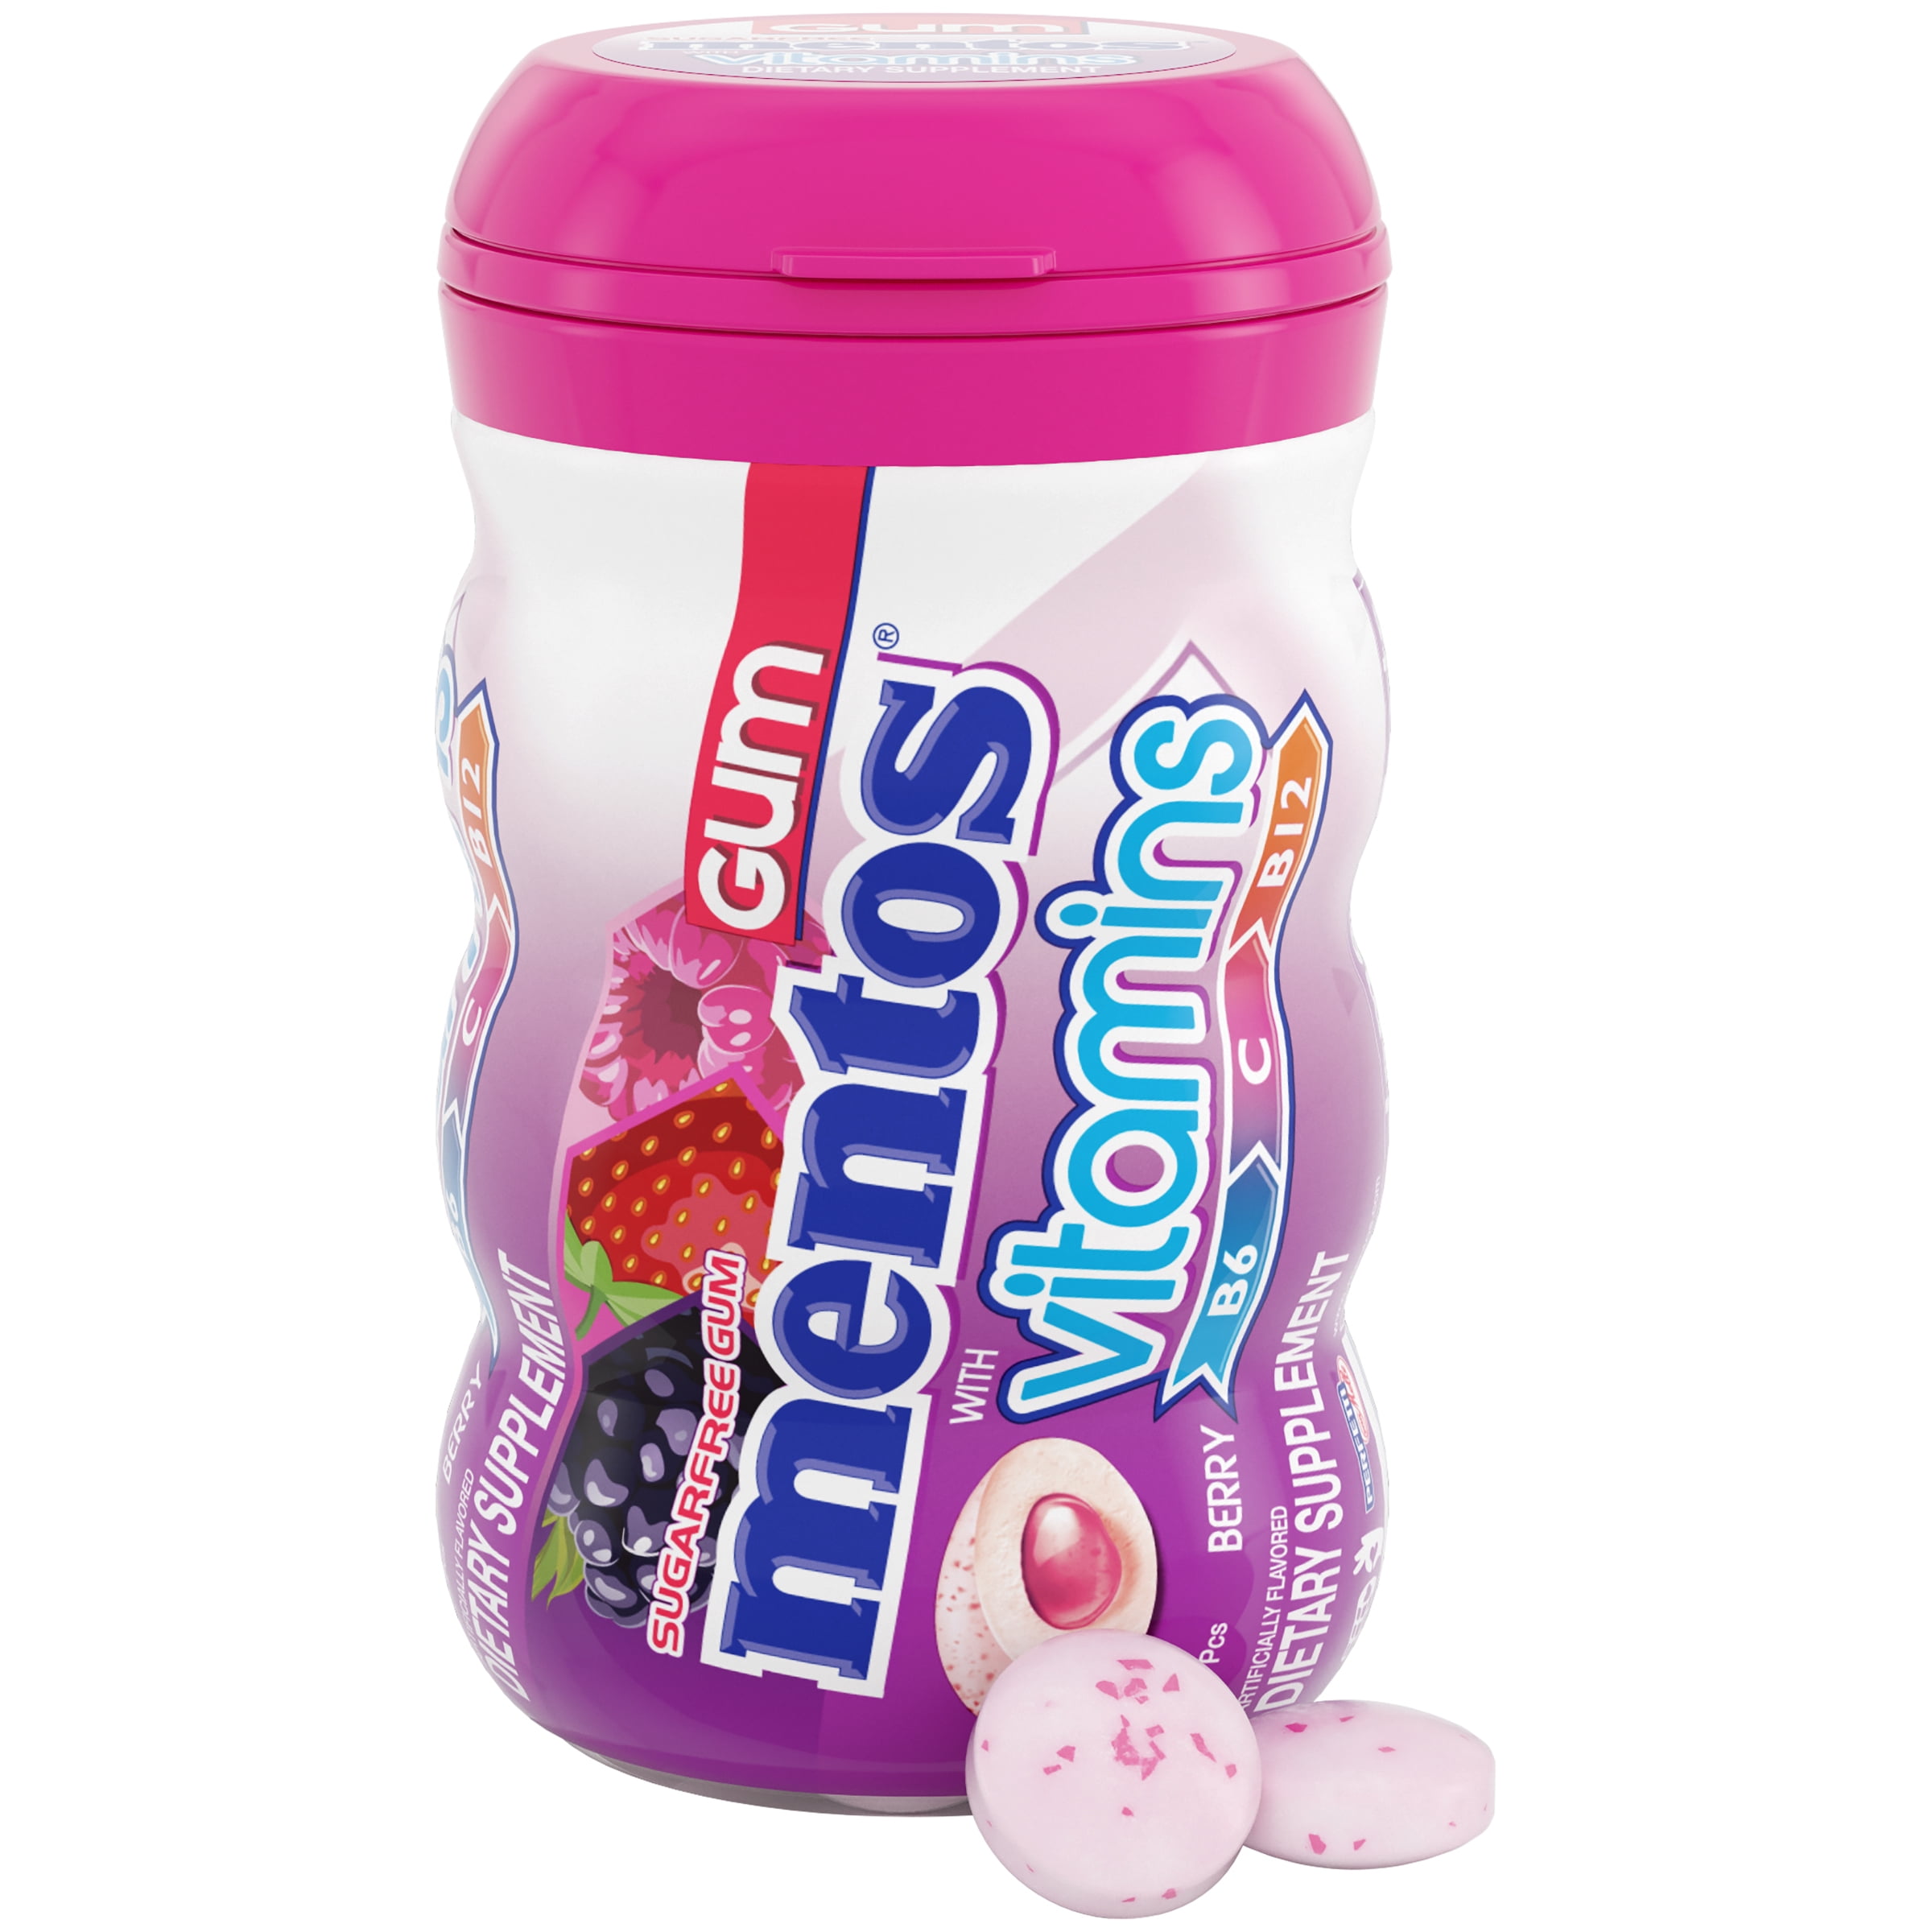 Mentos Sugar Free White Strawberry Chewing Gum, 72pcs